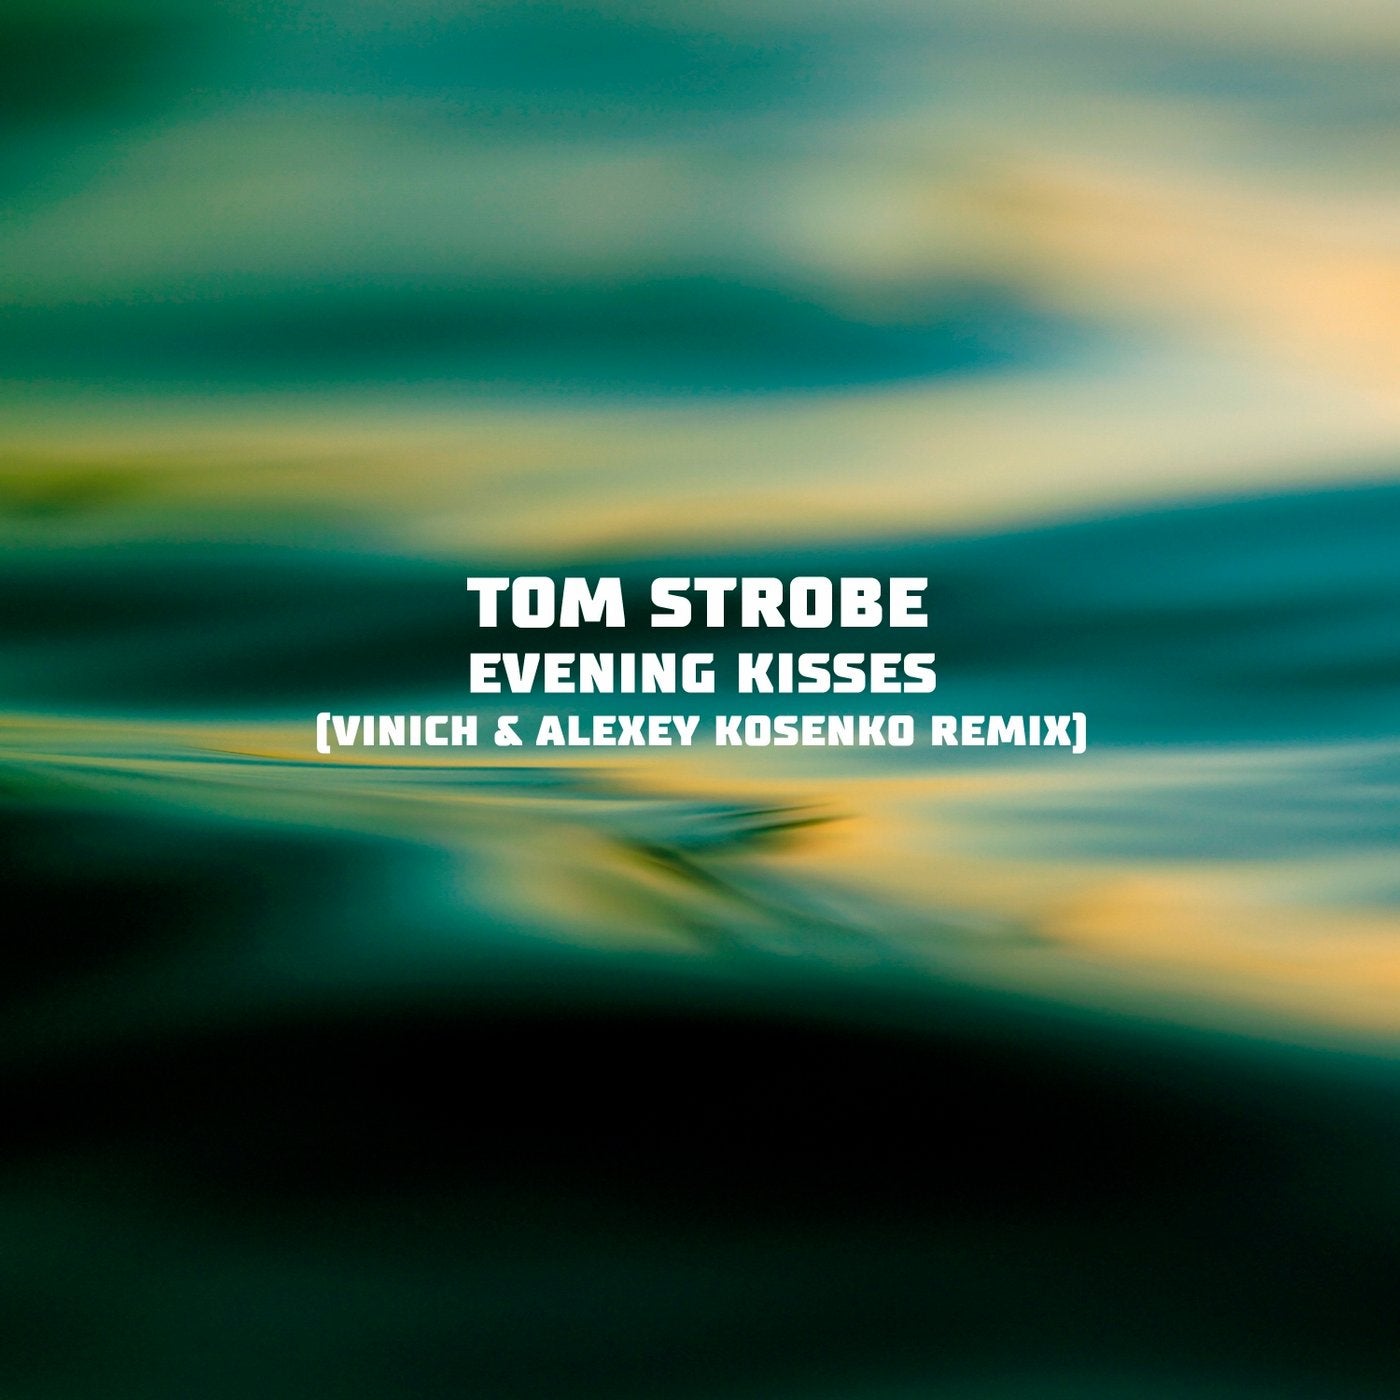 Evening Kisses (Vinich & Alexey Kosenko Remix)